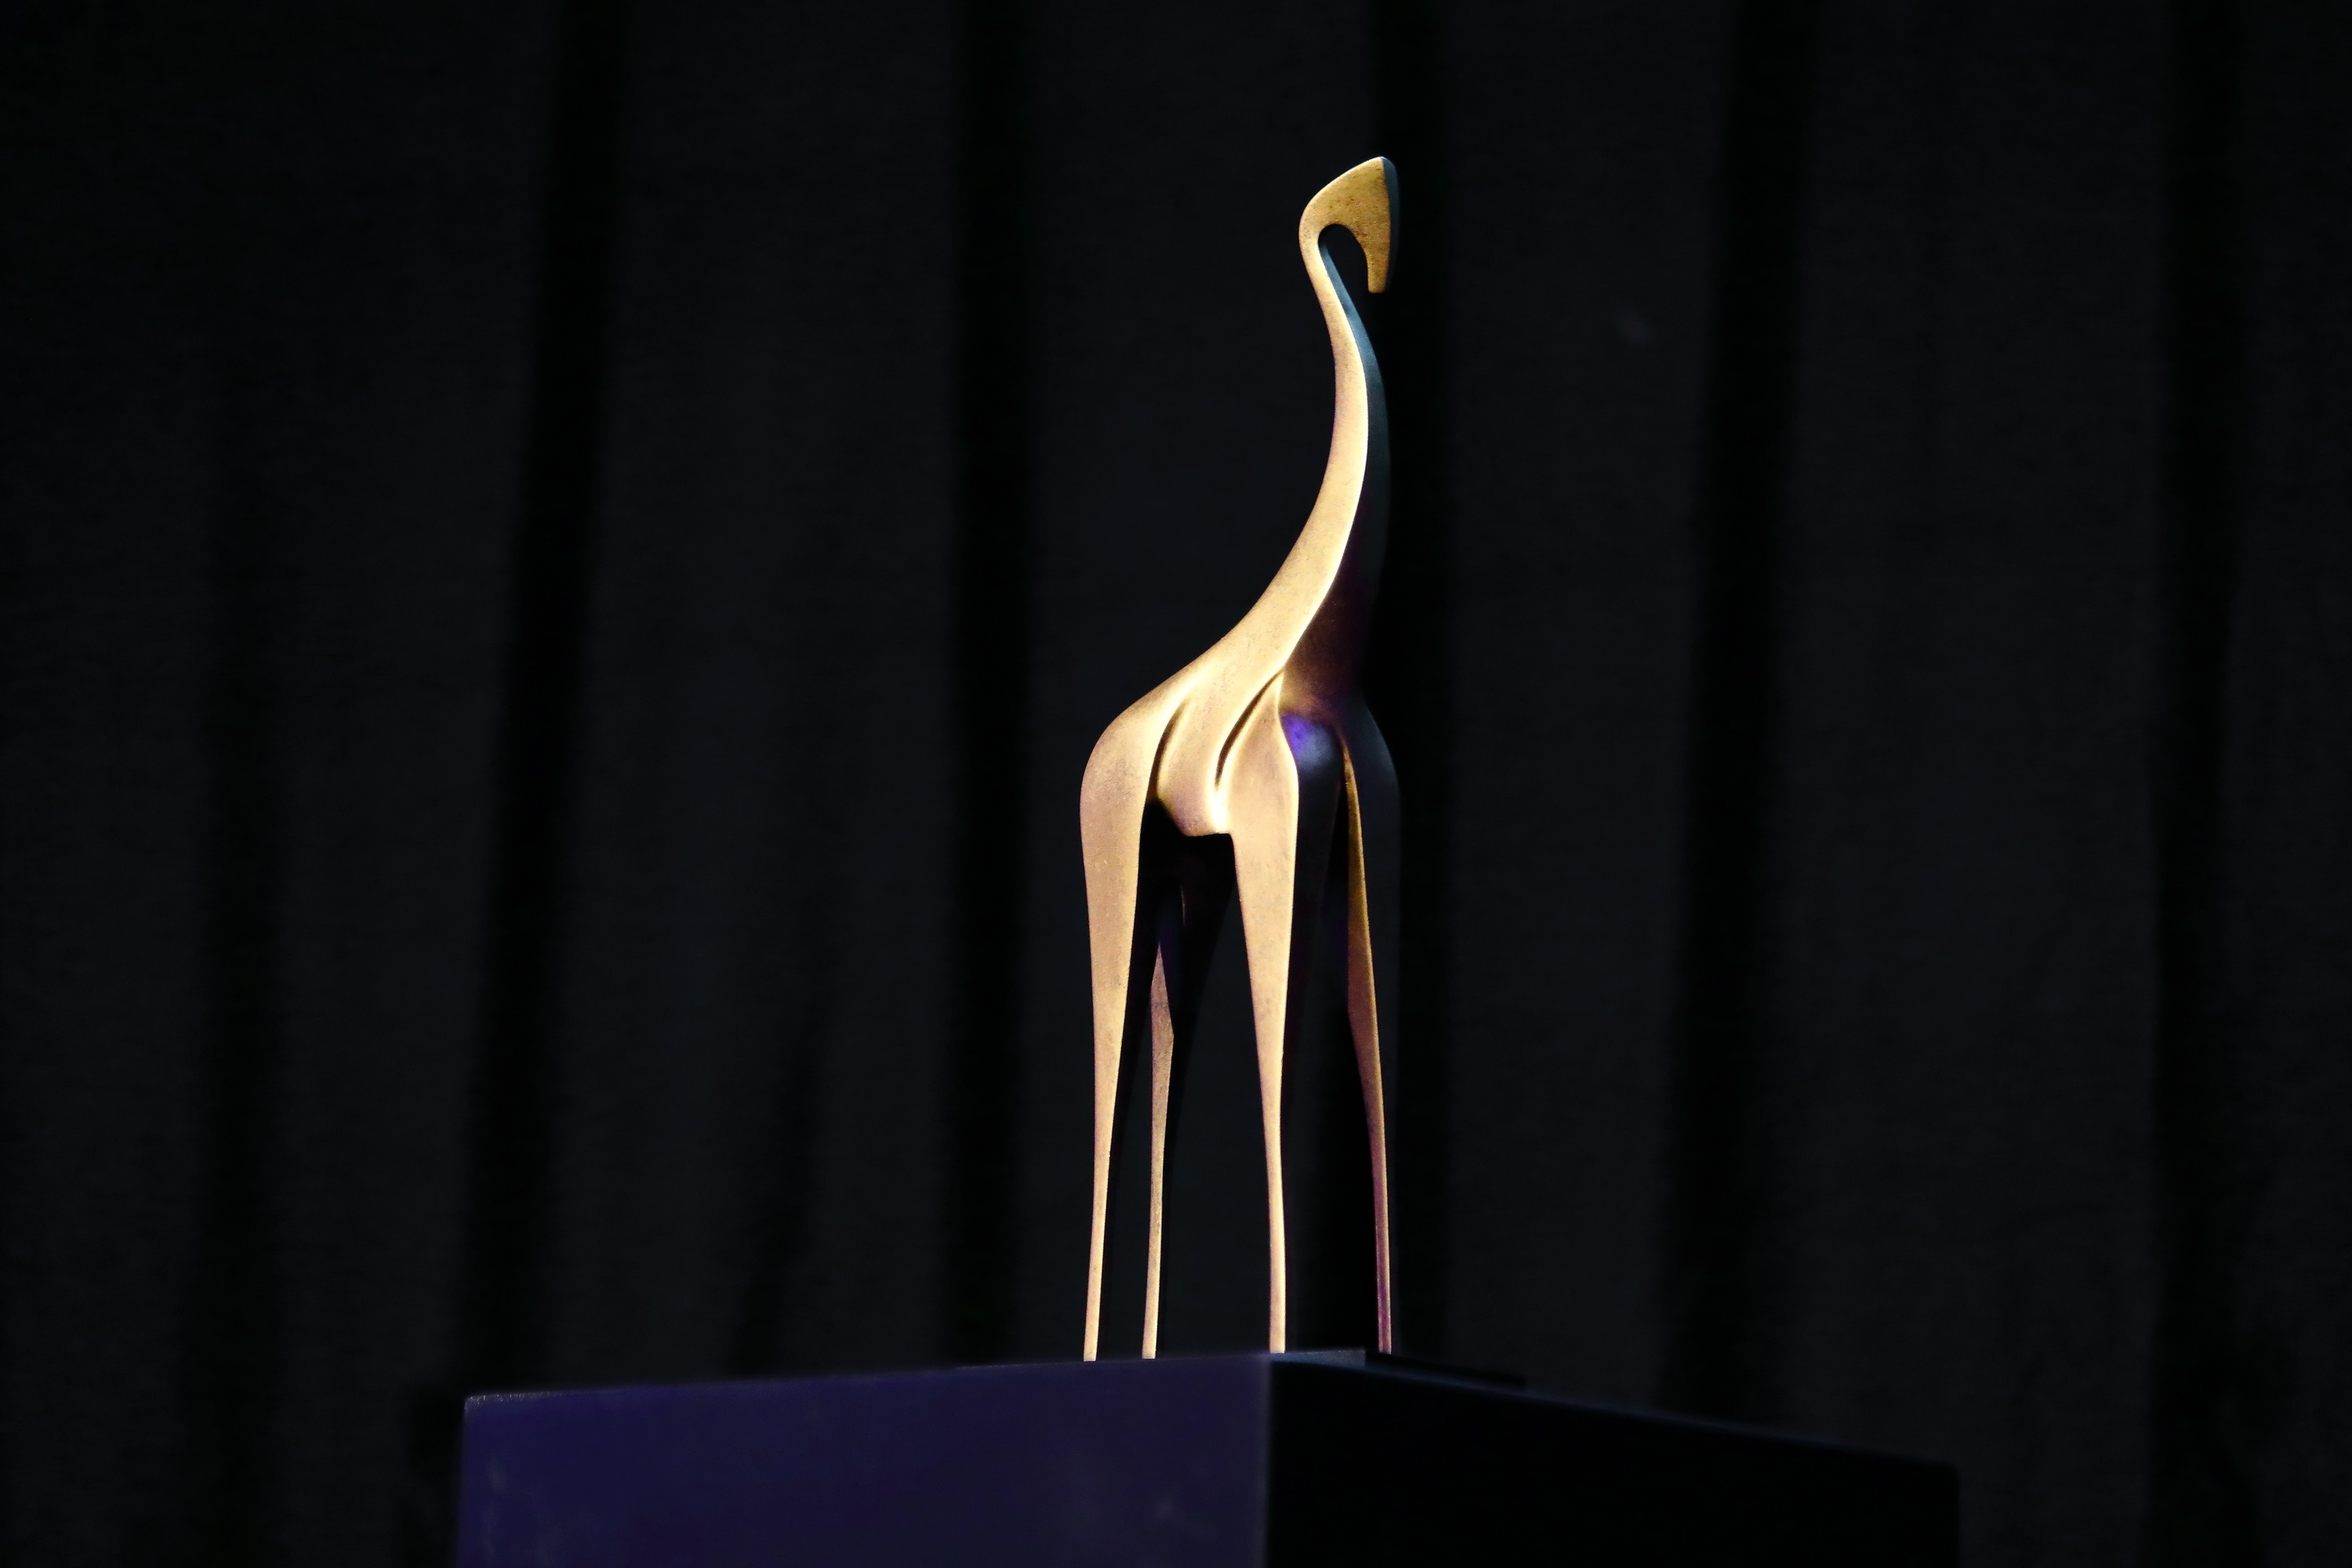 Gouden Giraffe Event Awards 2021 komt met verrassend concept